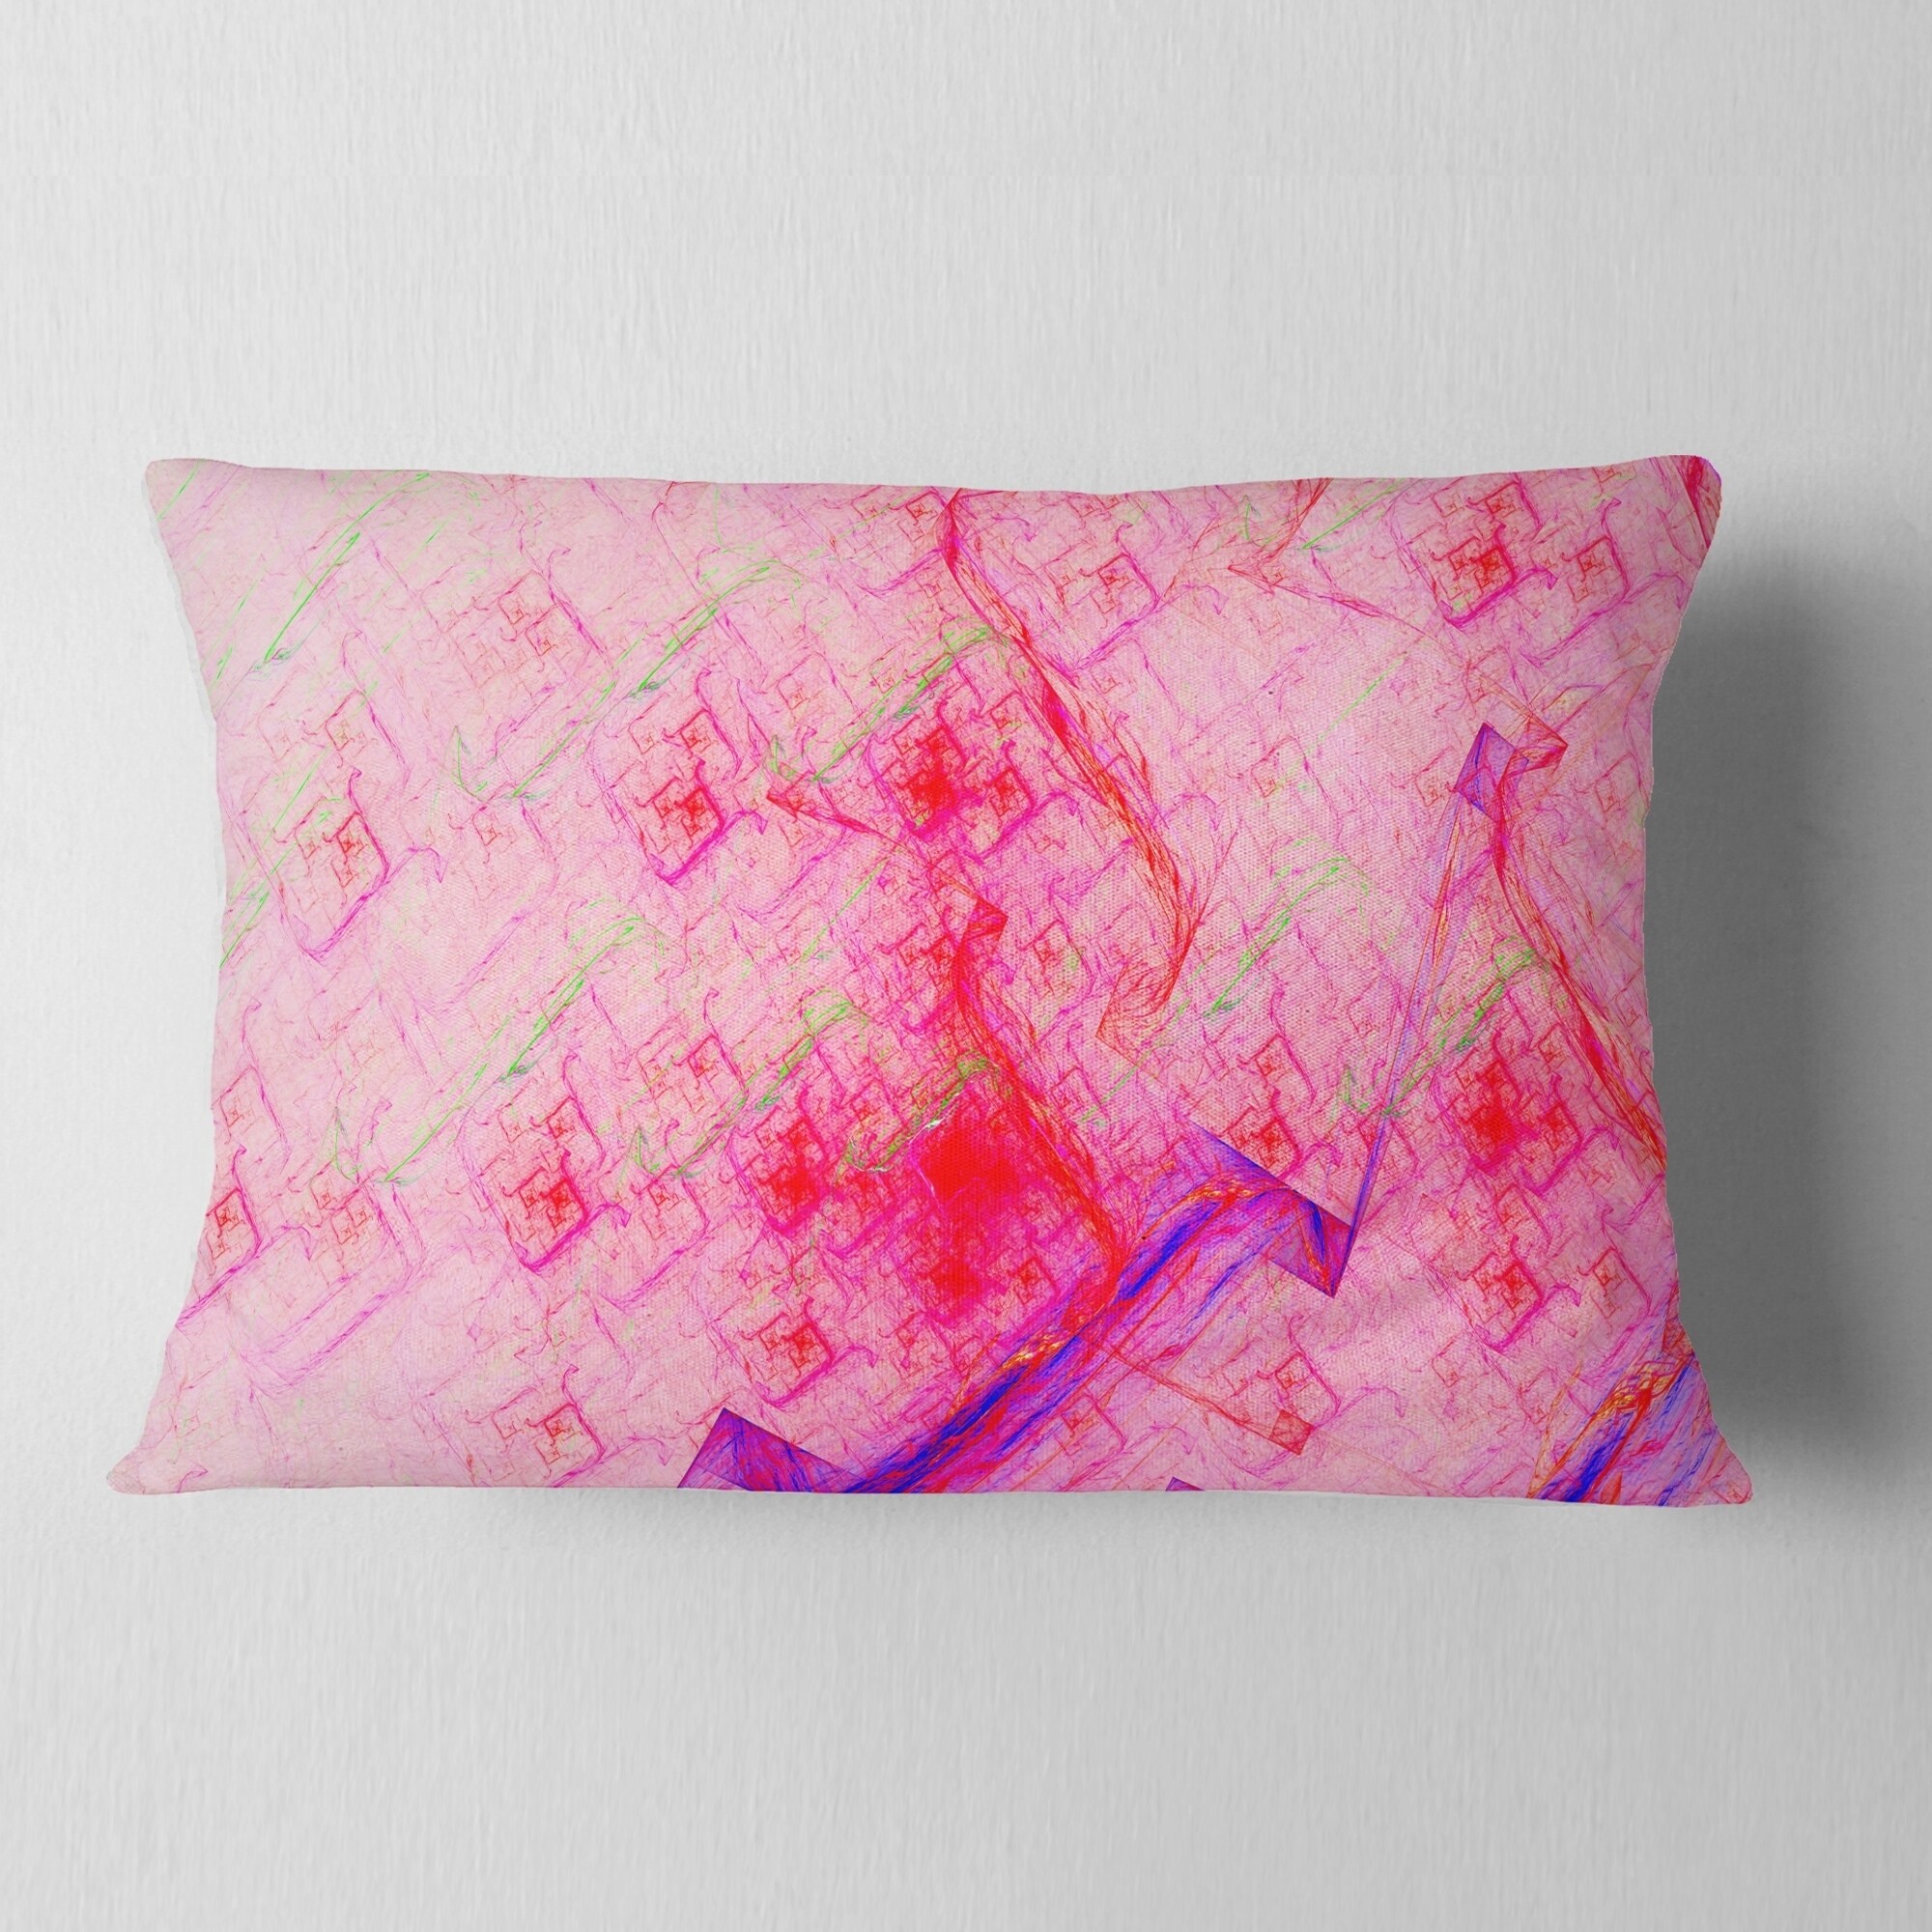 Designart 'Pink Fractal Electric Lightning' Abstract Throw Pillow